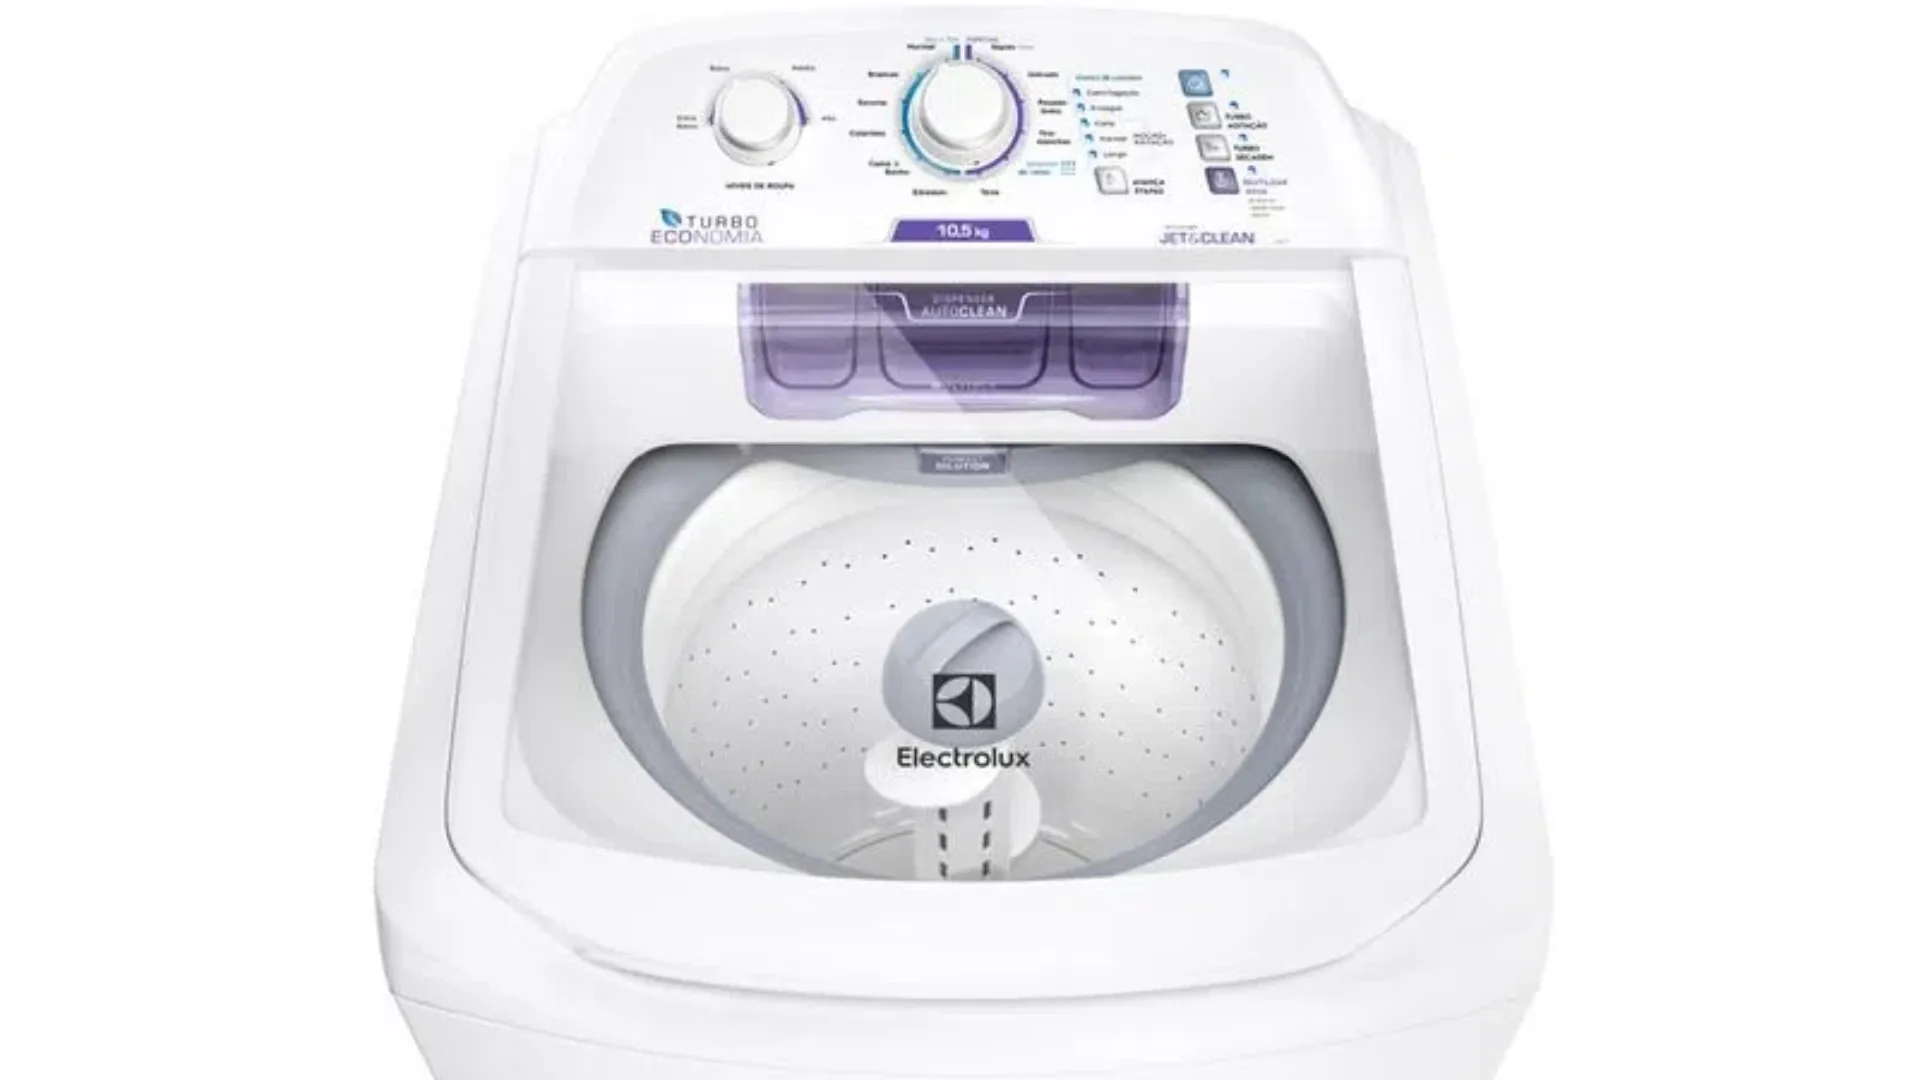 Imagem de máquina de lavar Electrolux branca